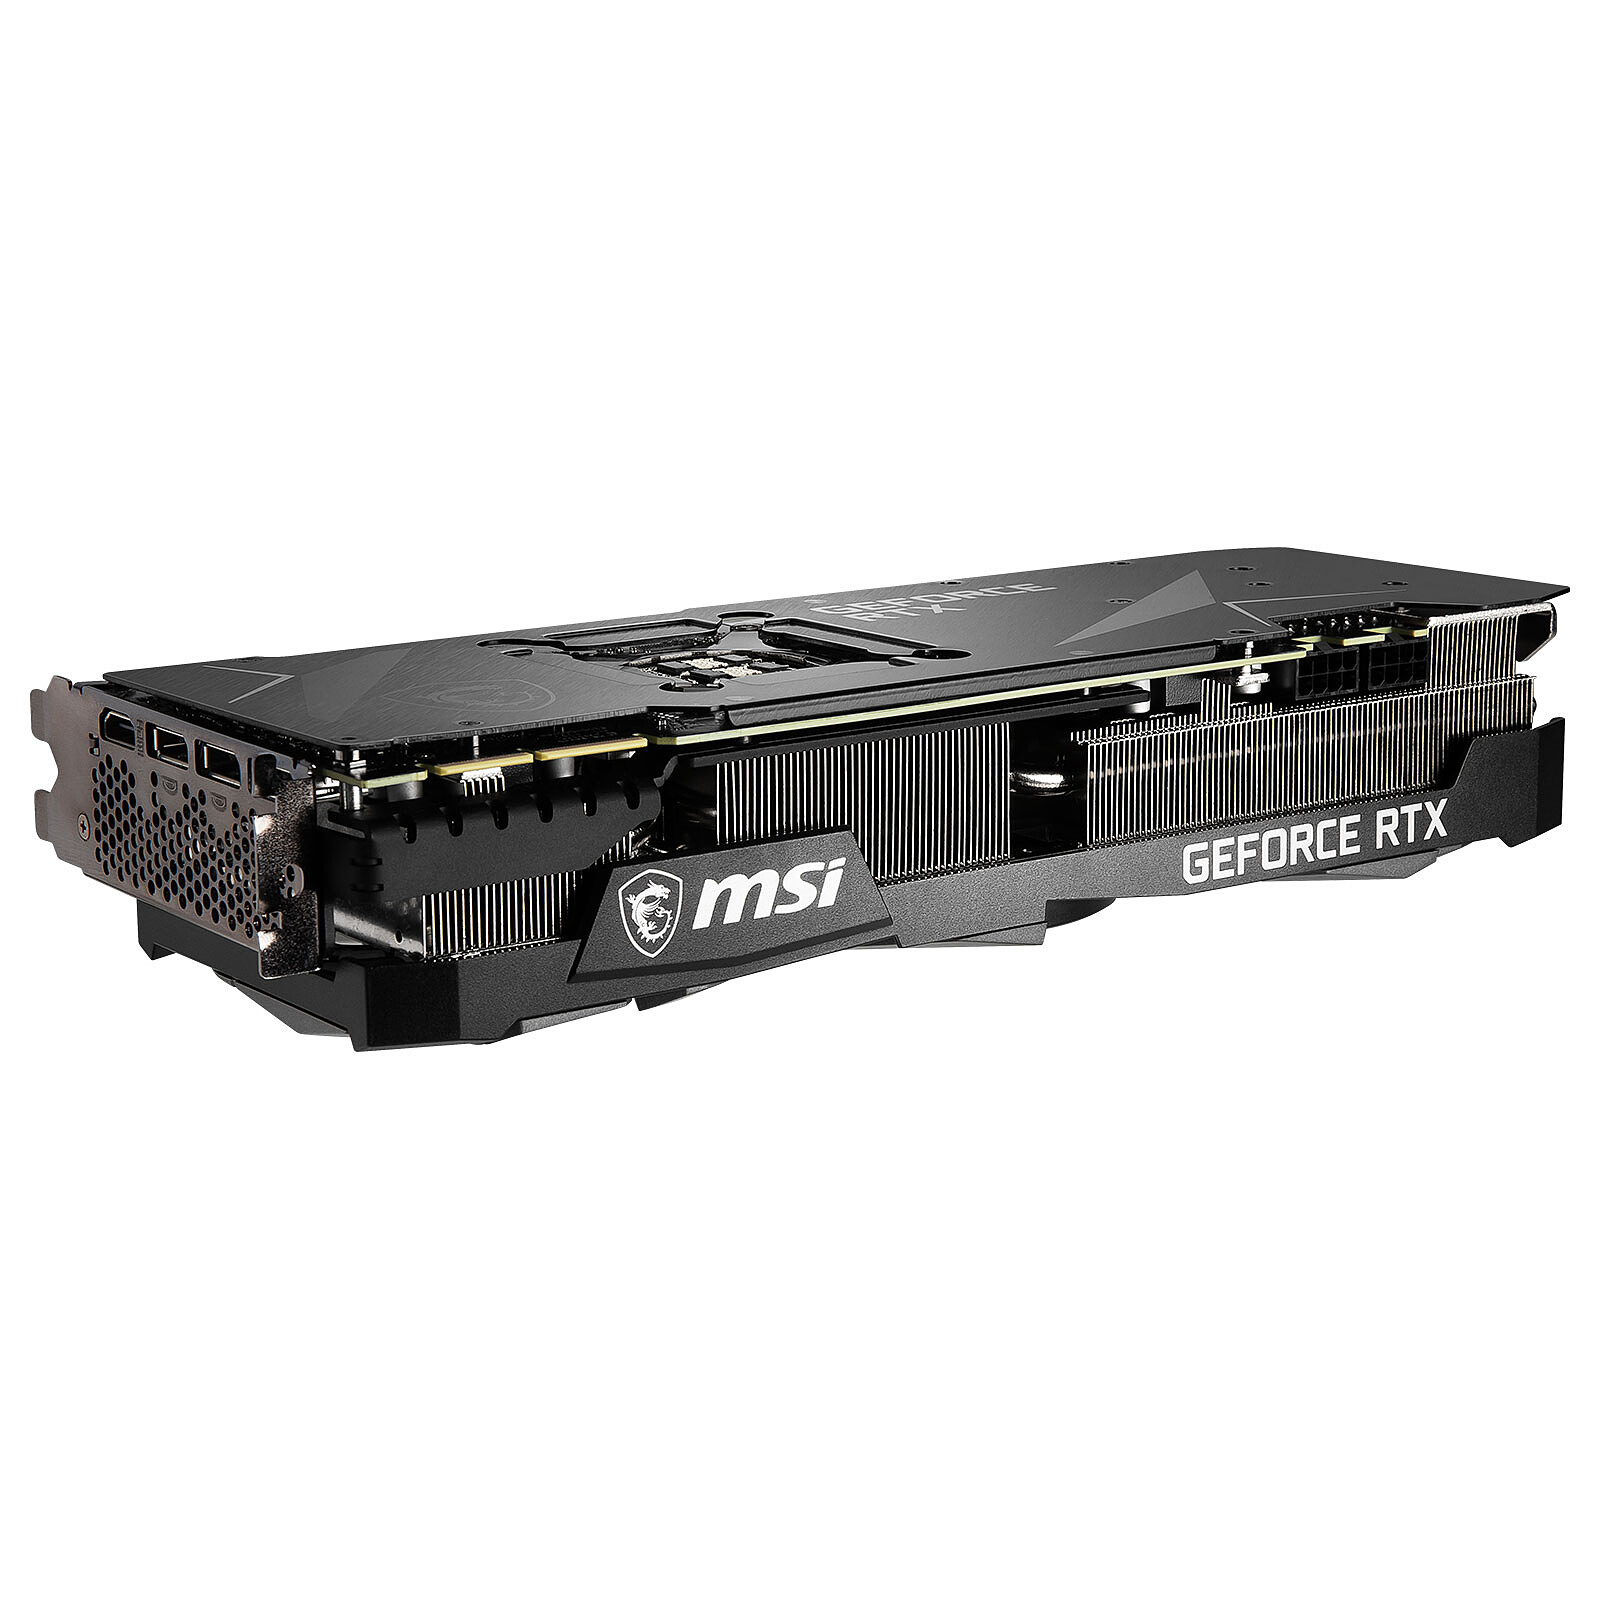 MSI GeForce RTX 3090 VENTUS 3X 24G OC - Graphics card - LDLC 3 